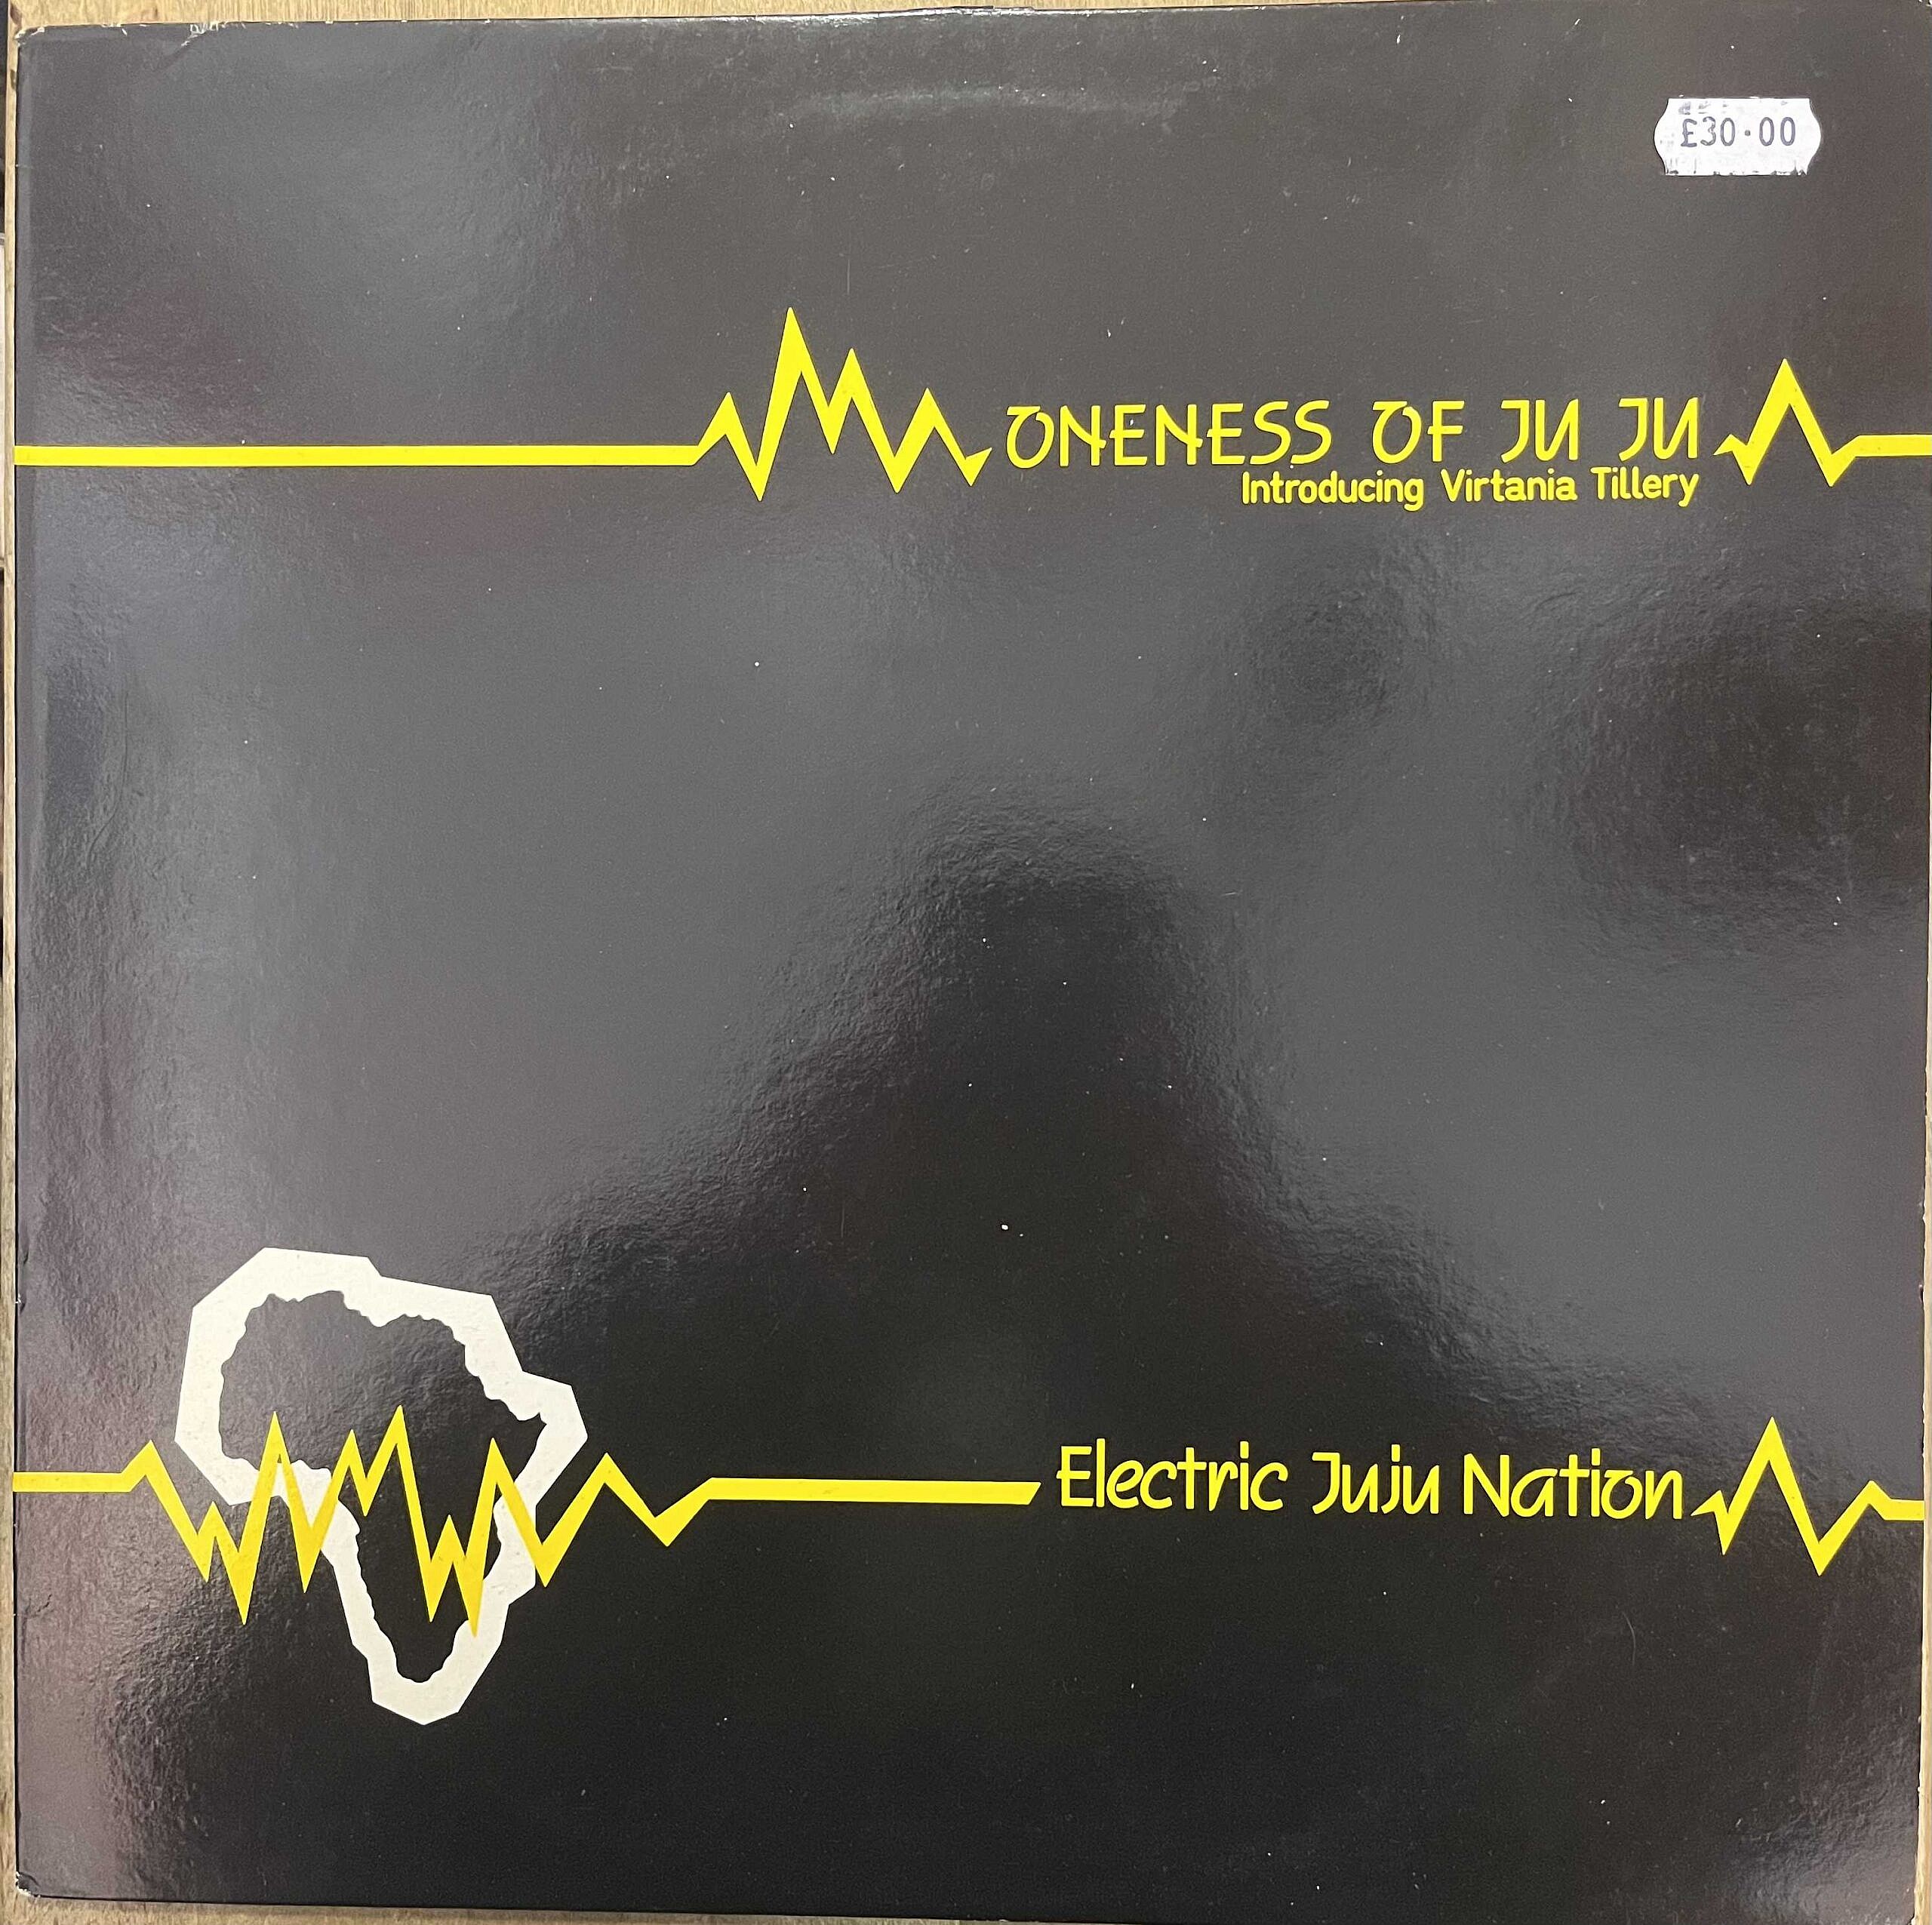 Electric Juju Nation